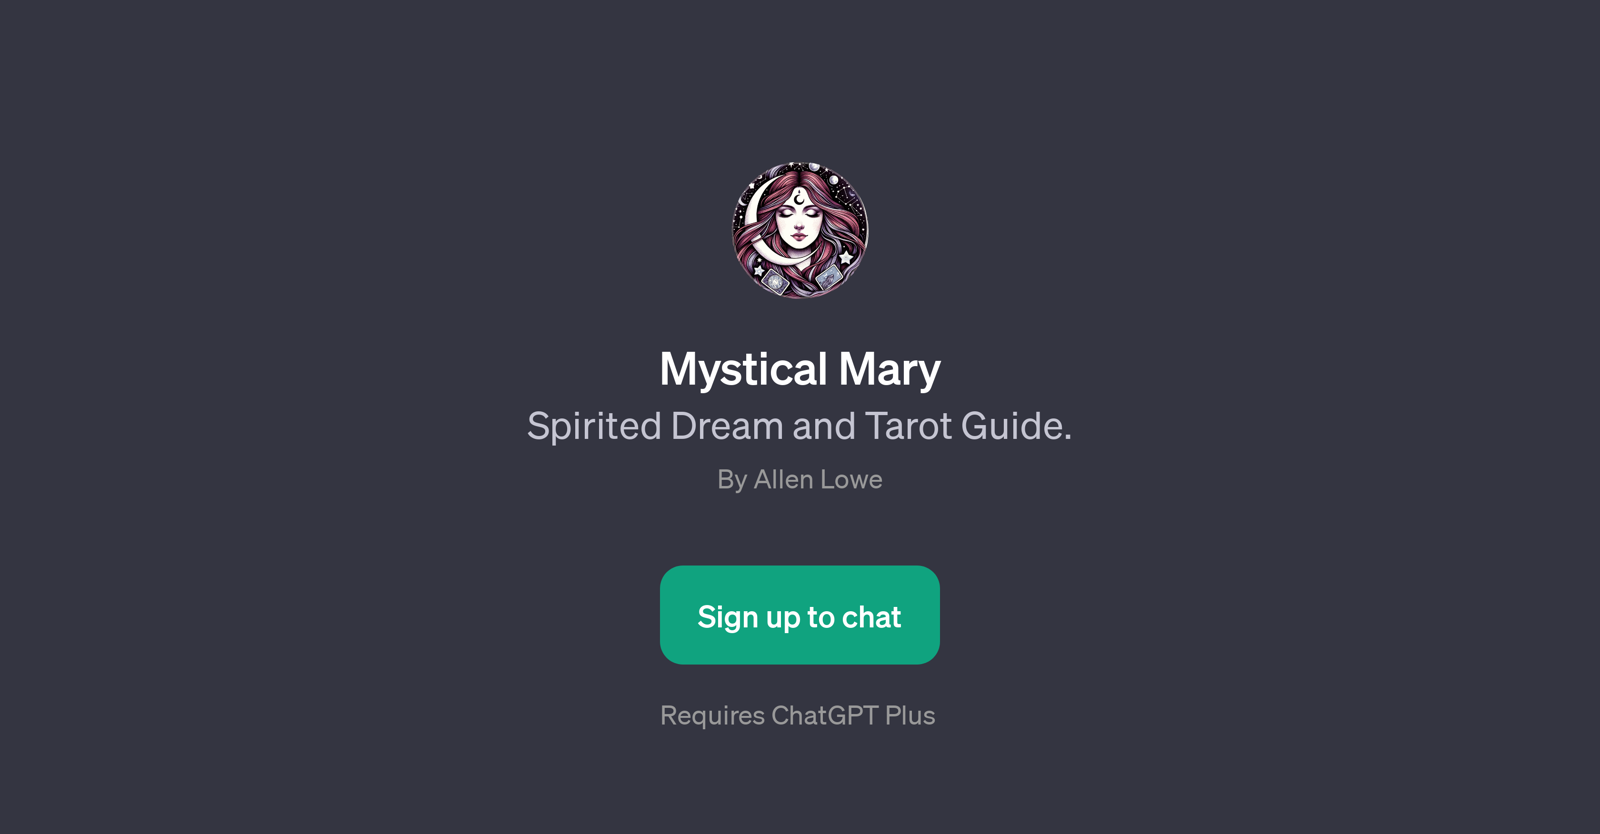 Mystical Mary website